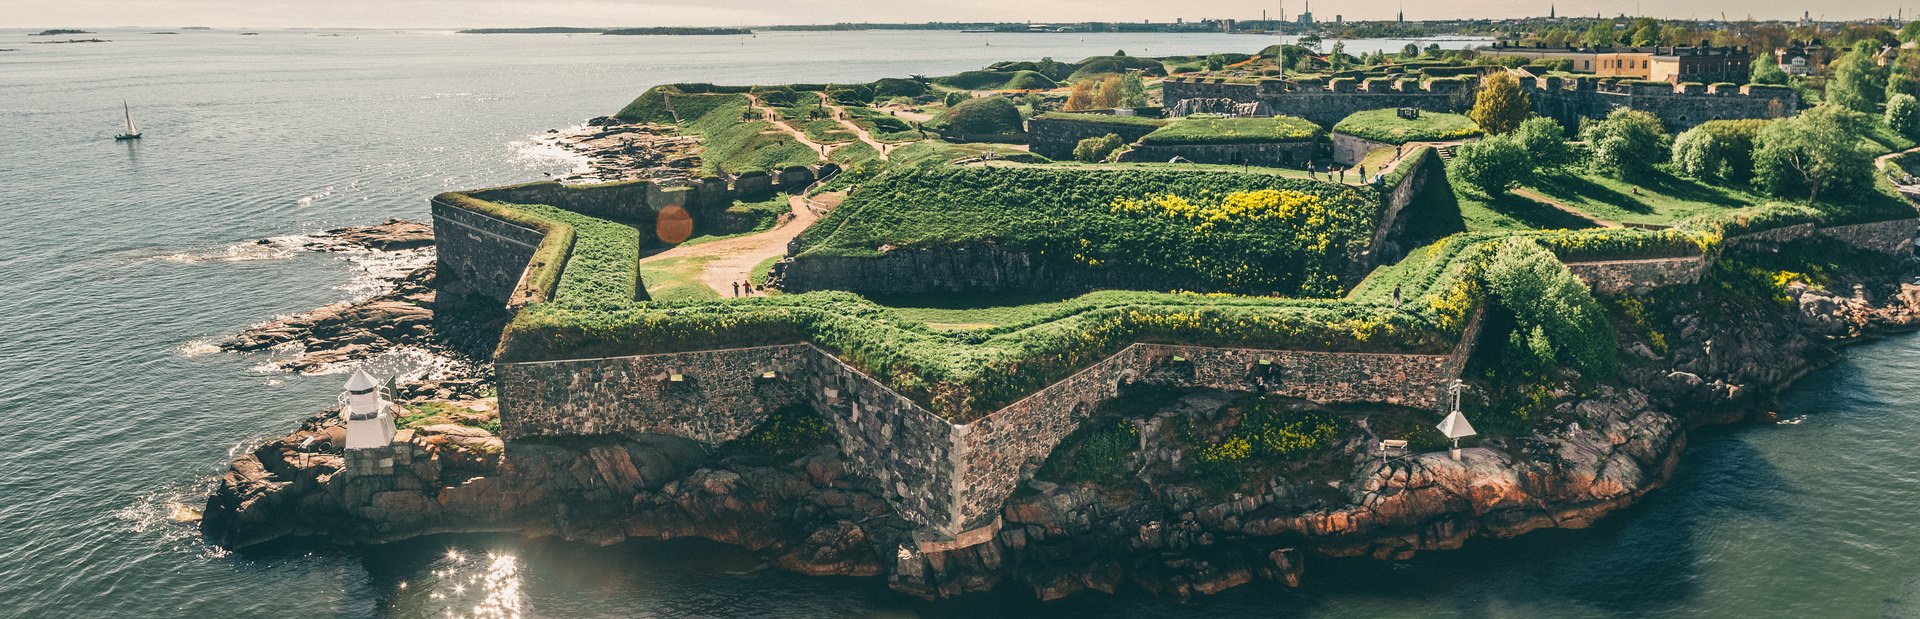 Suomenlinna Fortress Image 1